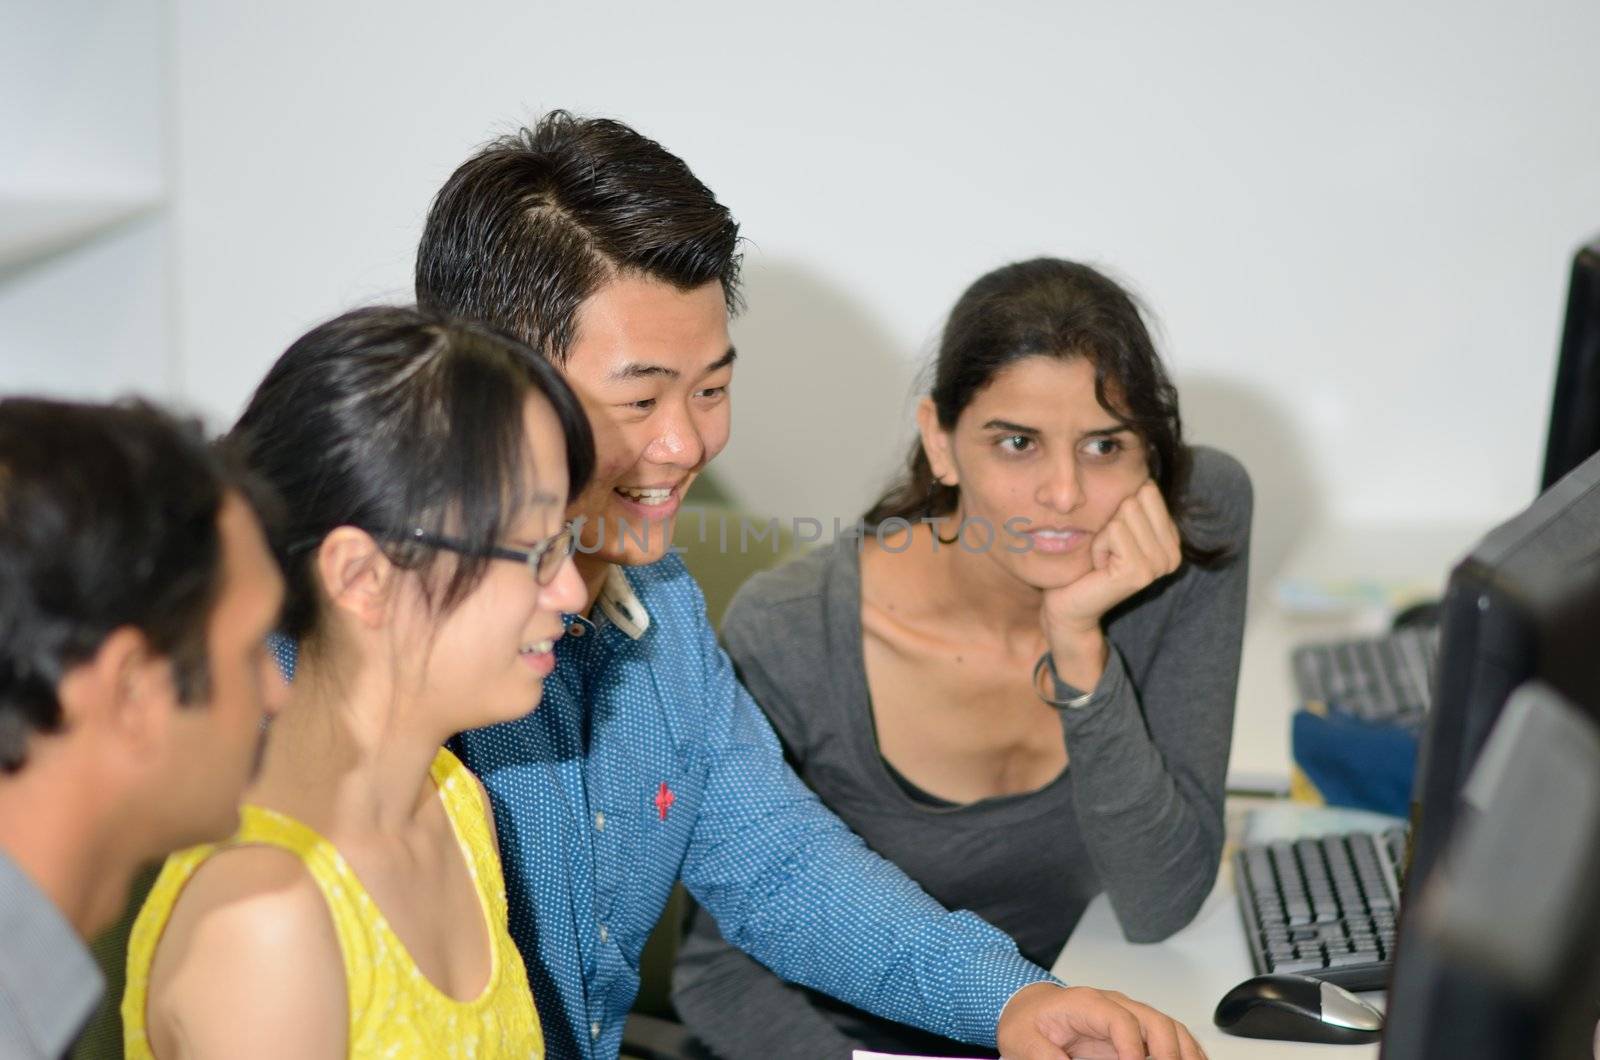 Four members of the computing team